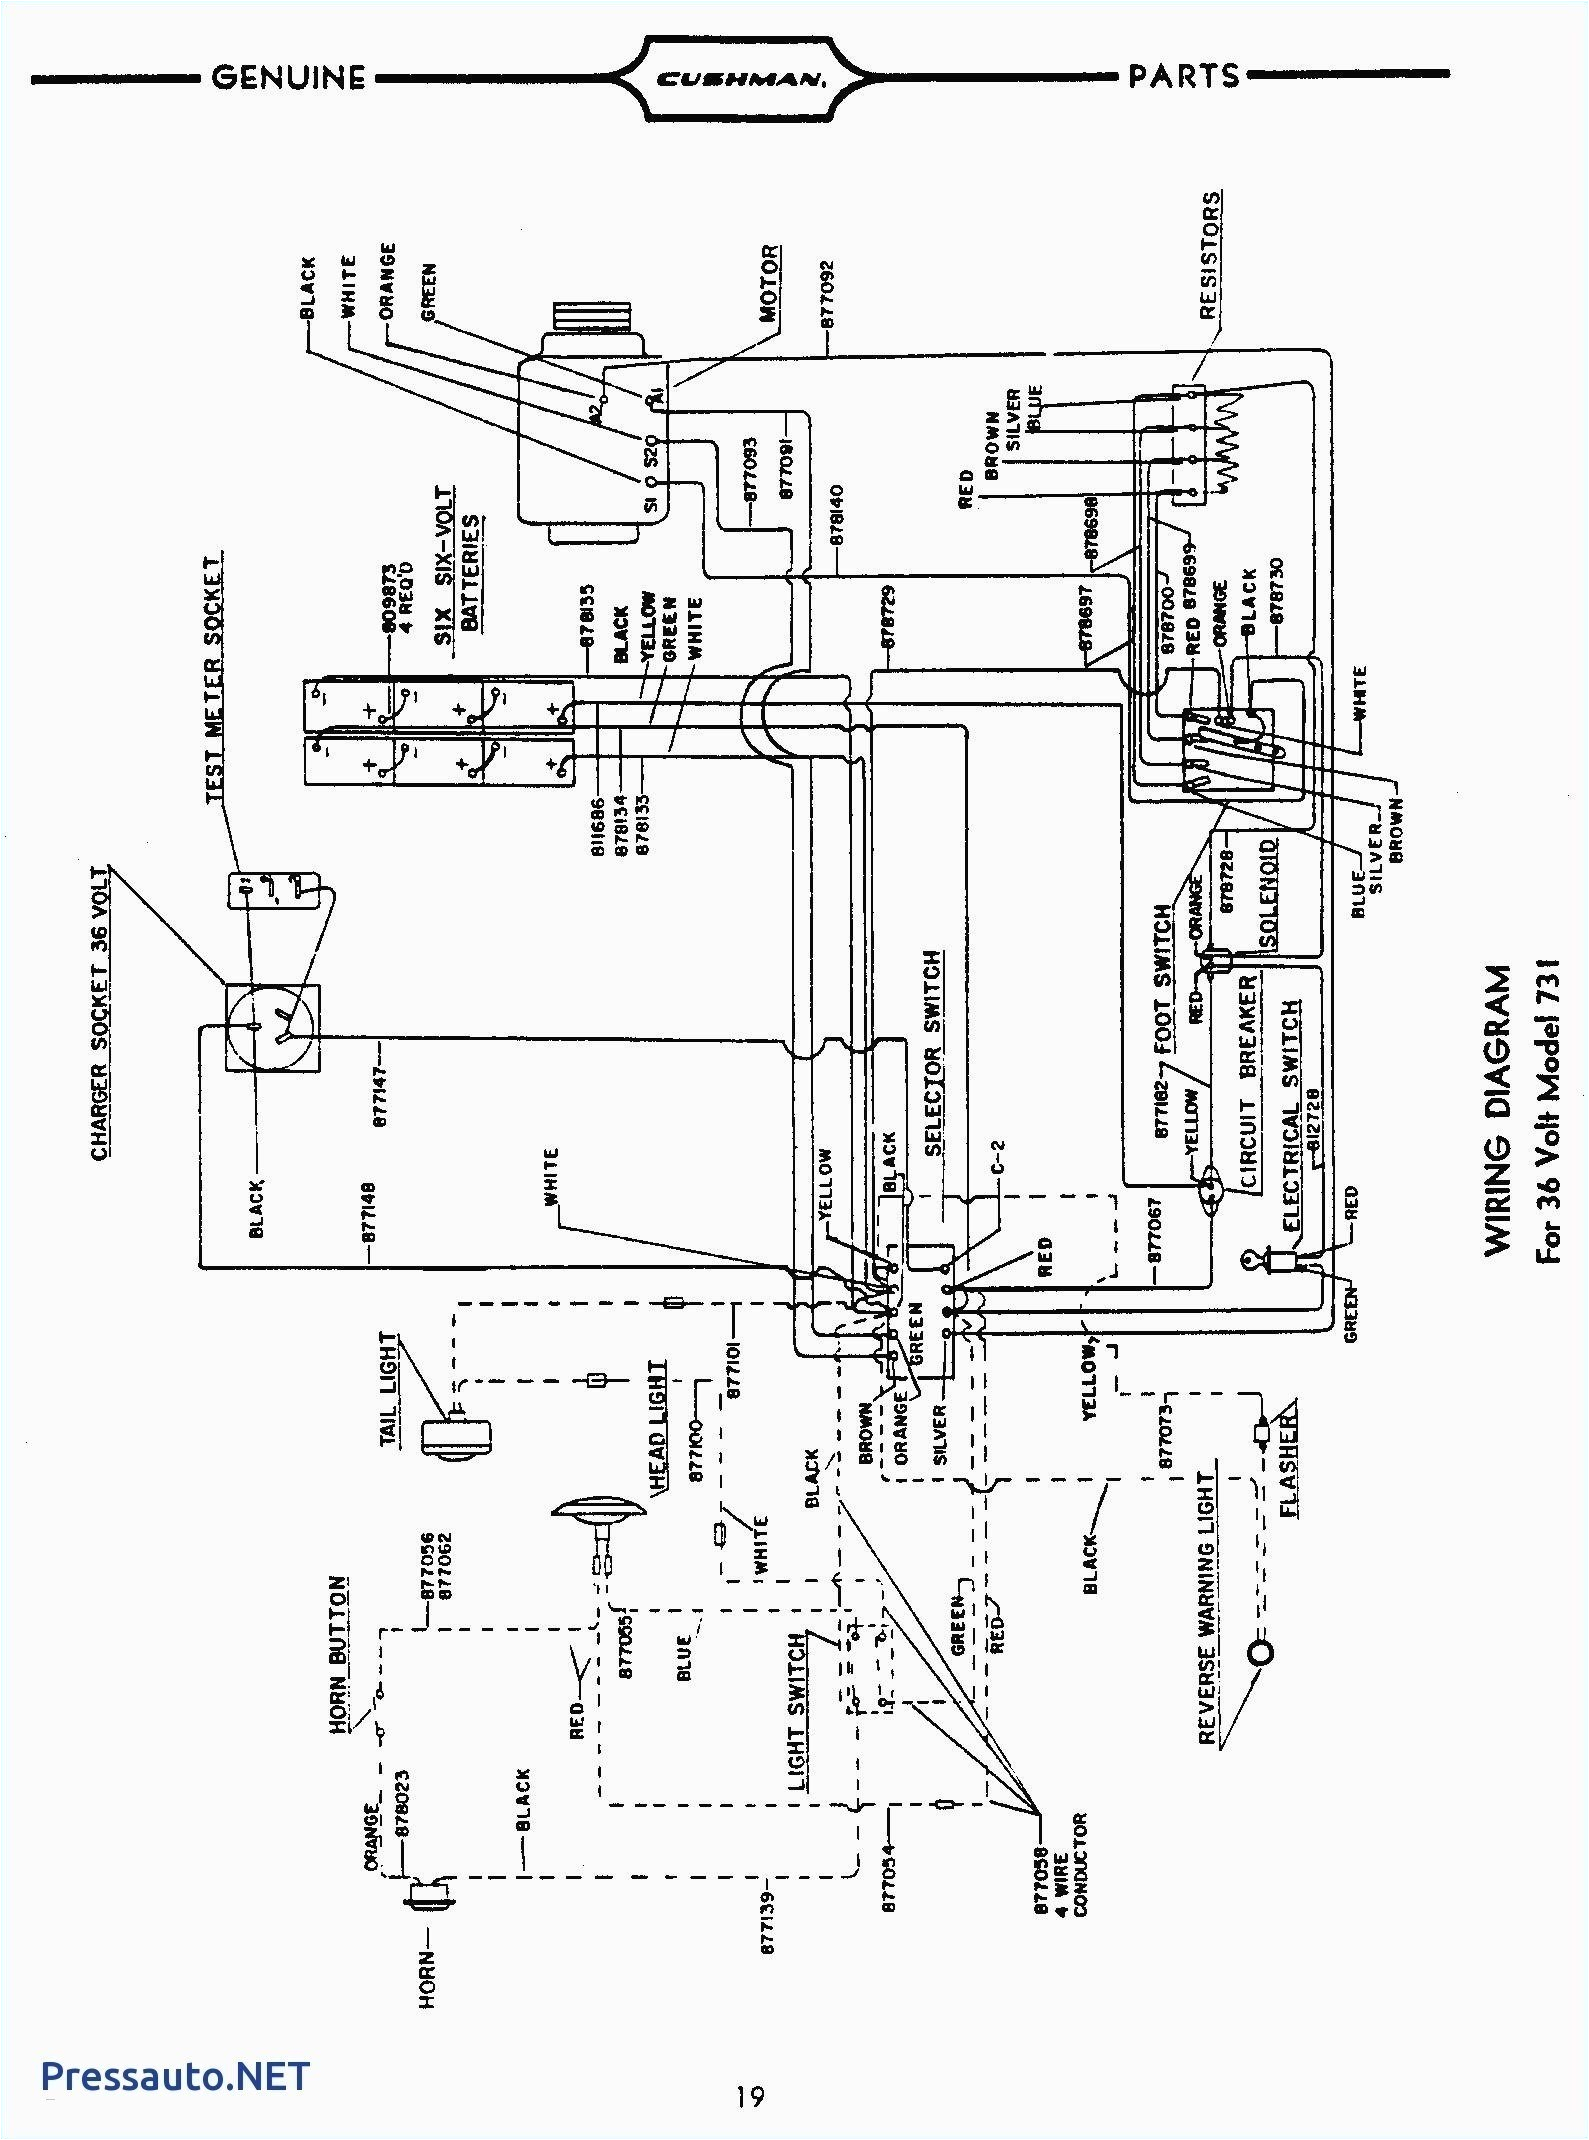 ezgo pds wiring diagram wiring diagram database ezgo pds wiring diagram ezgo pds wiring diagram